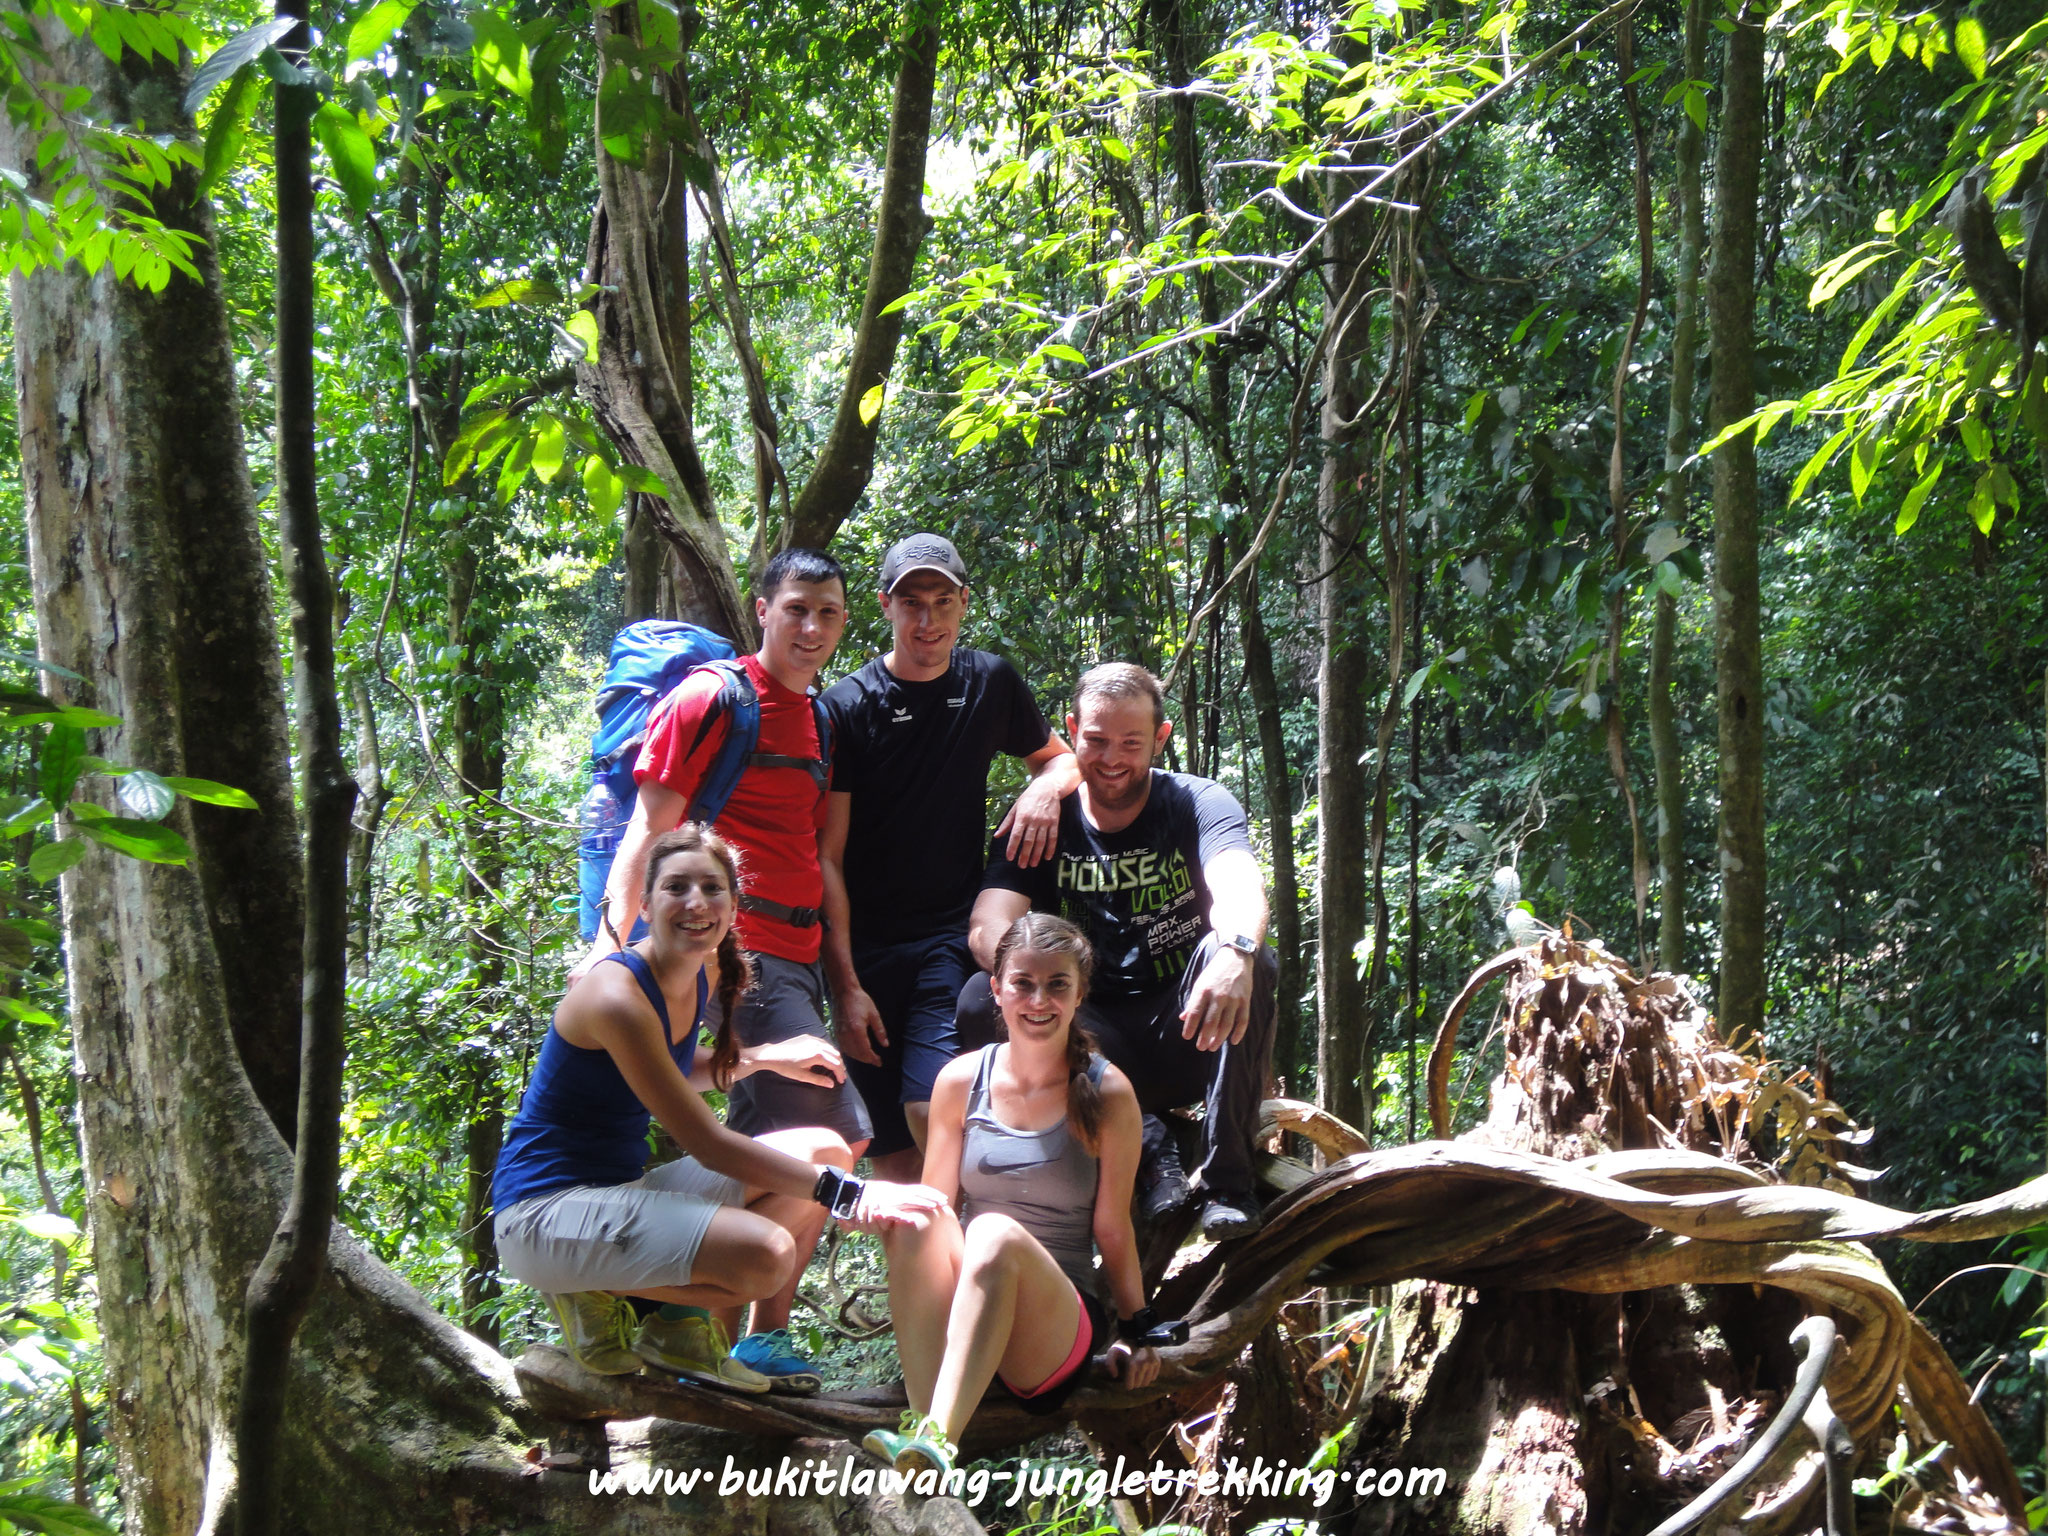 Welcome - Jungle Trekking Tours in Bukit Lawang,Sumatra!